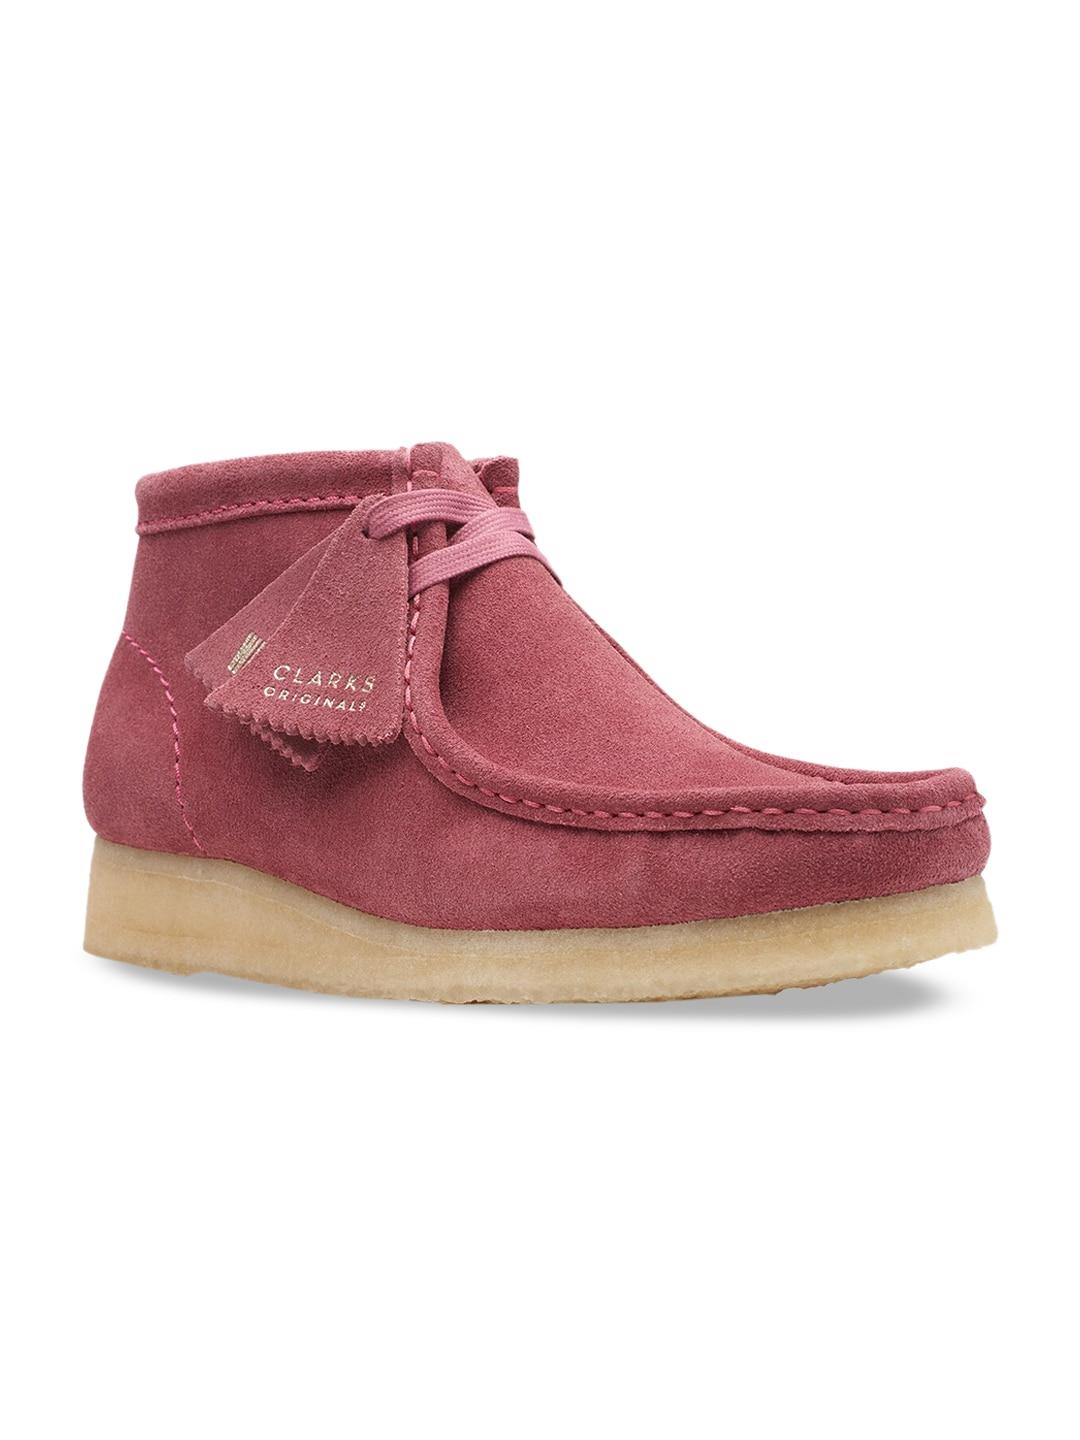 clarks-women-pink-solid-regular-boots